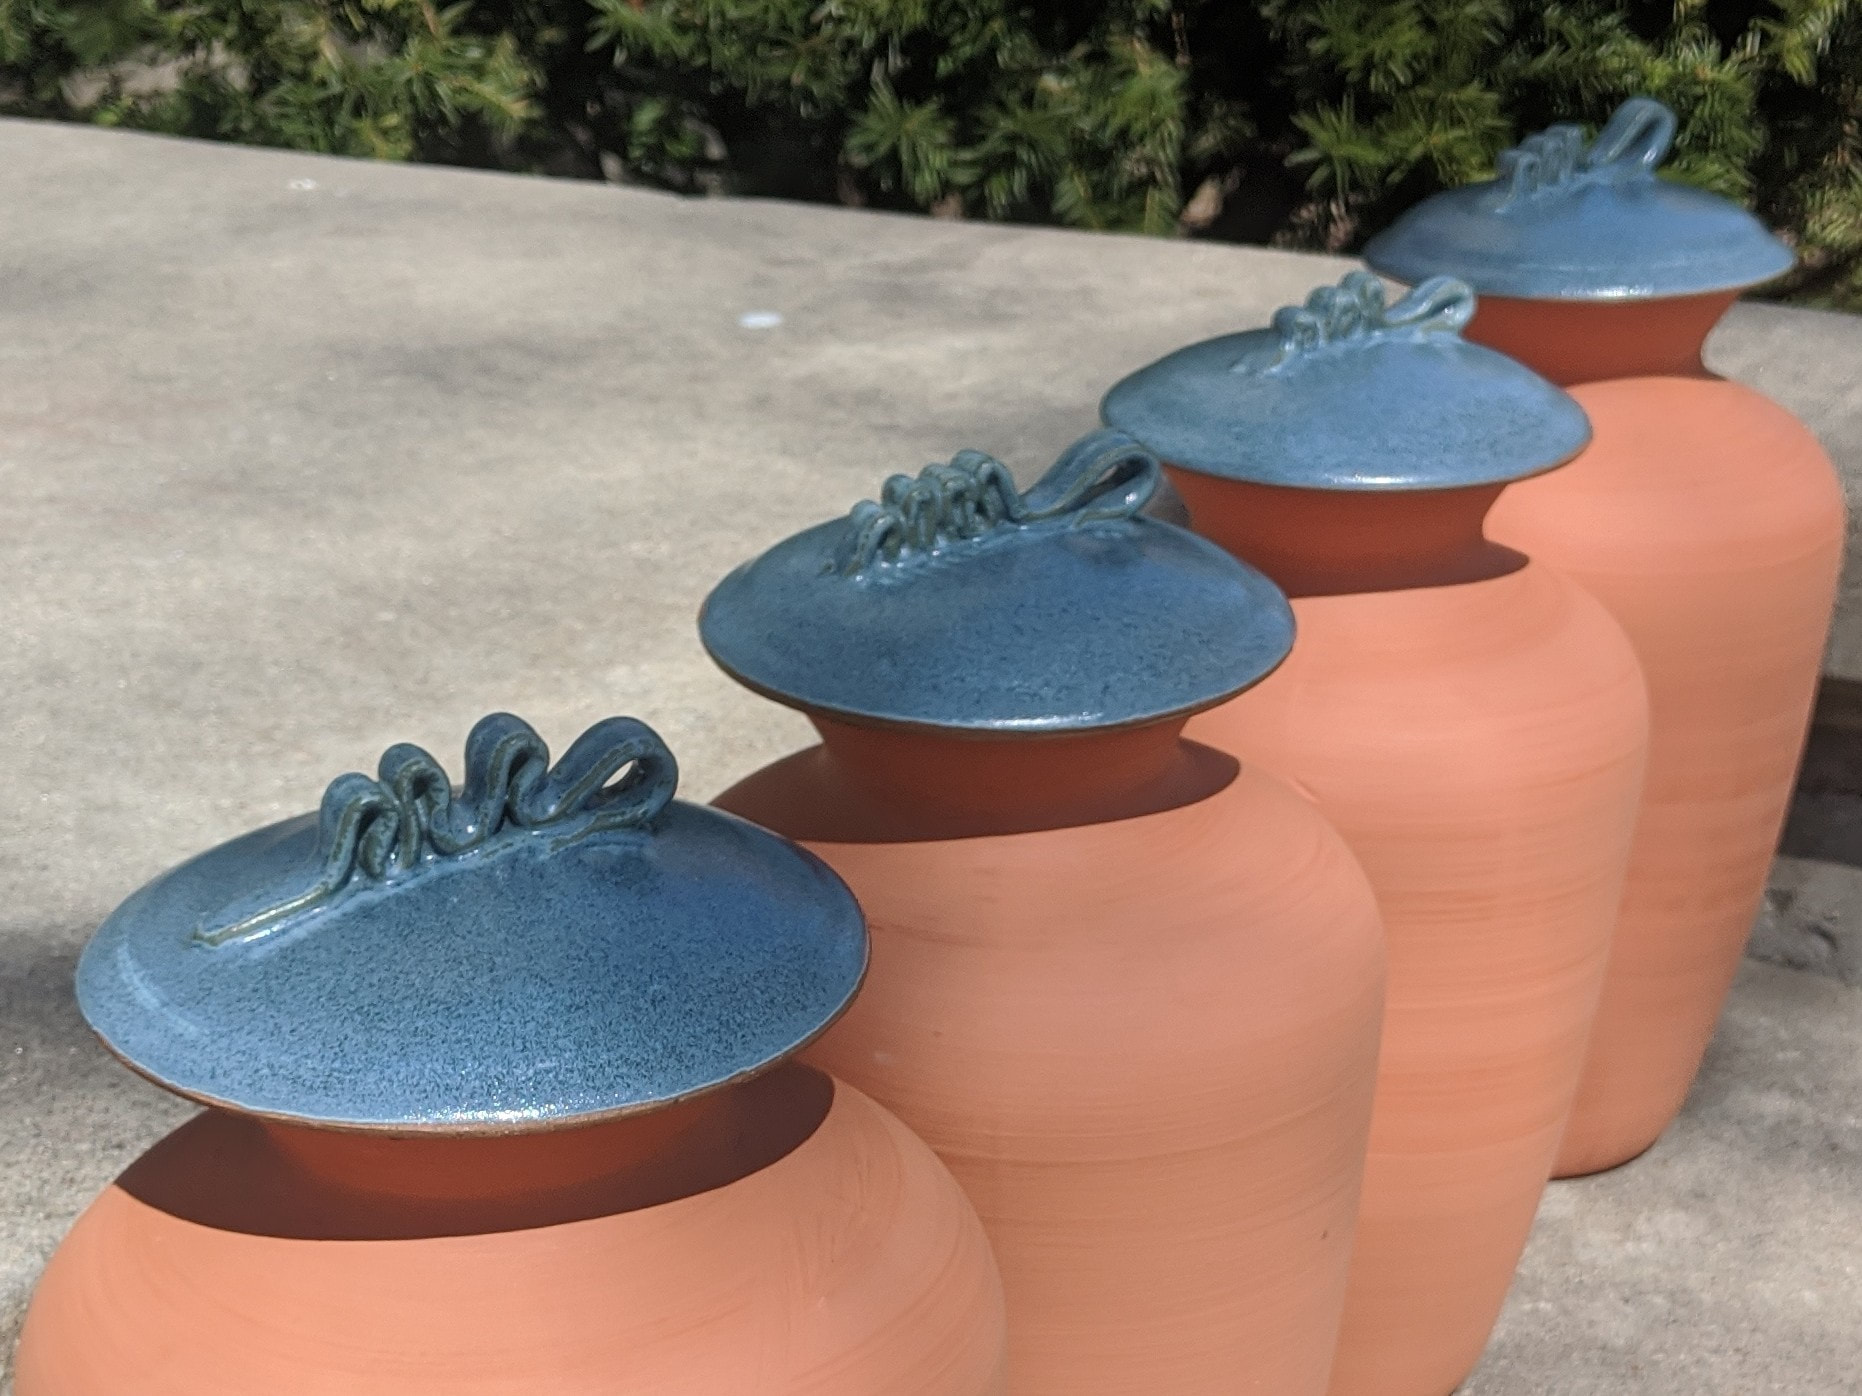 Four Ollas with lids - 1.25 Gallon Garden Irrigation Pot - Gardener Gift